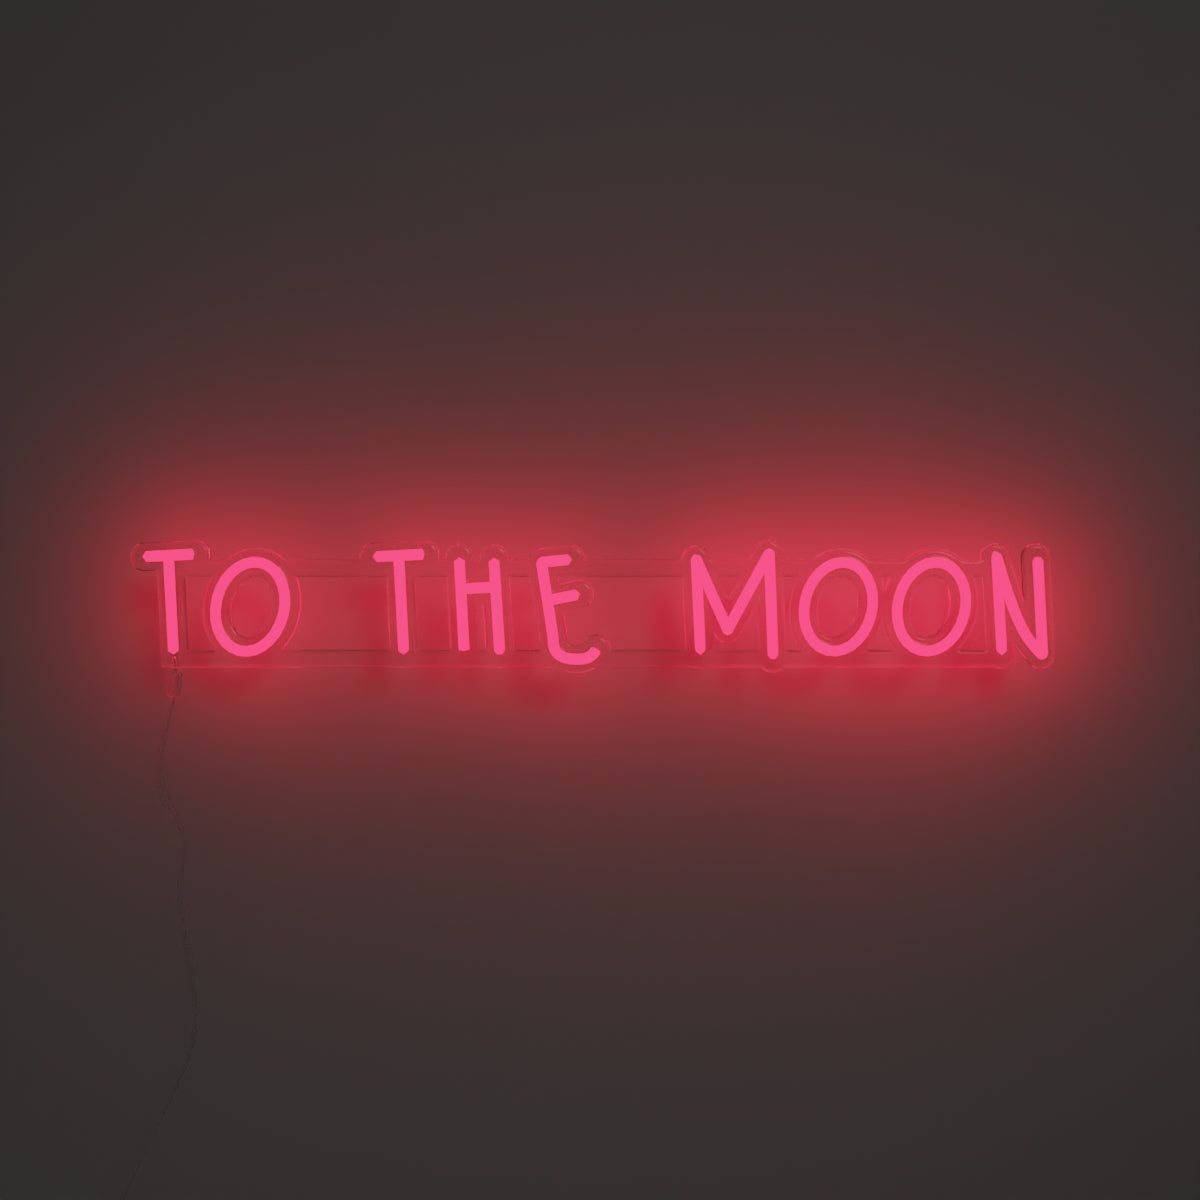 To the moon - Neon Tabela - Neonbir